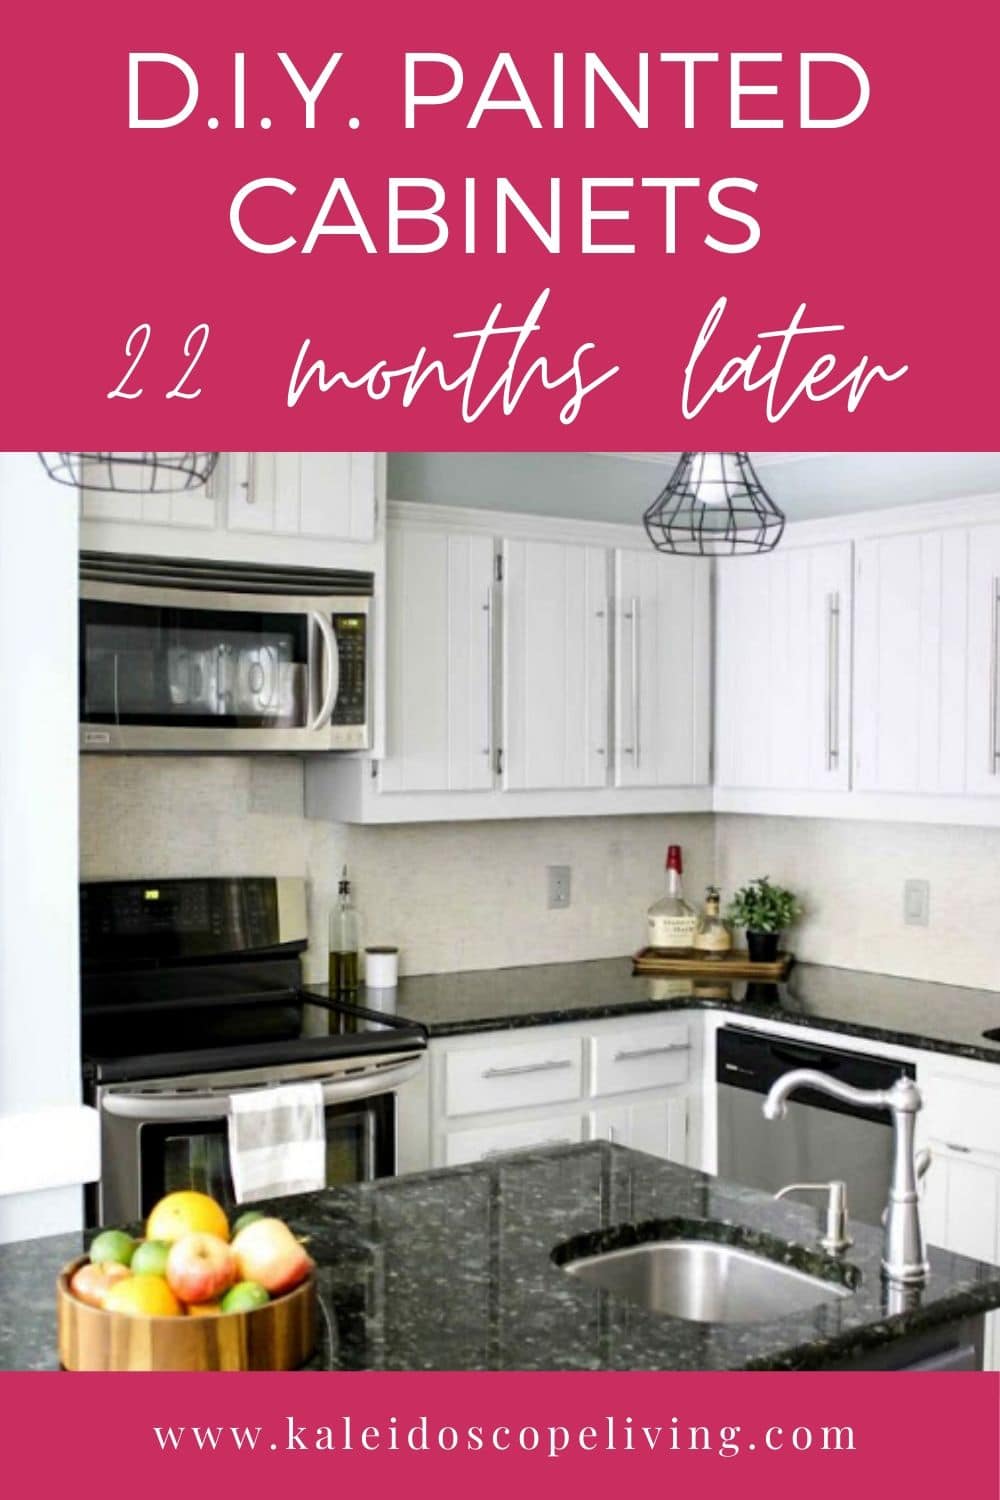 20 Ideas for Kitchen Counter Updates